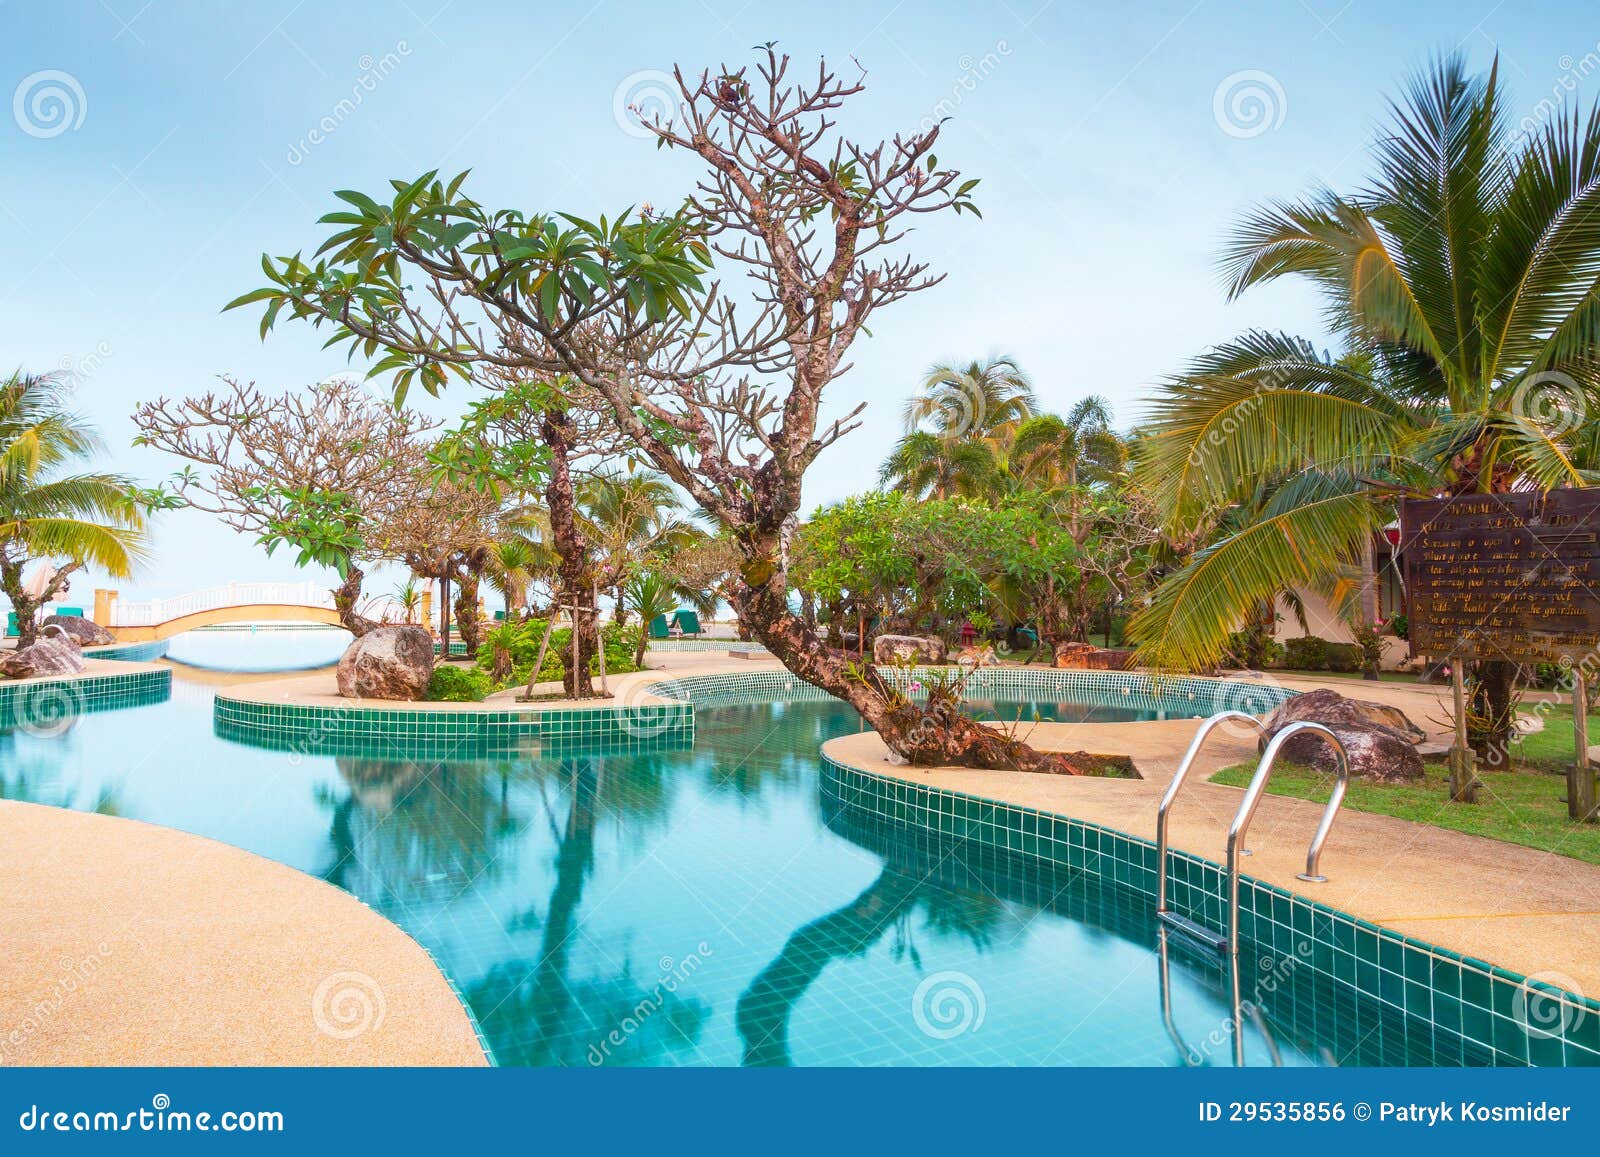 Tropical Resort Scenery At Sunrise Stock Photo Image Of - 